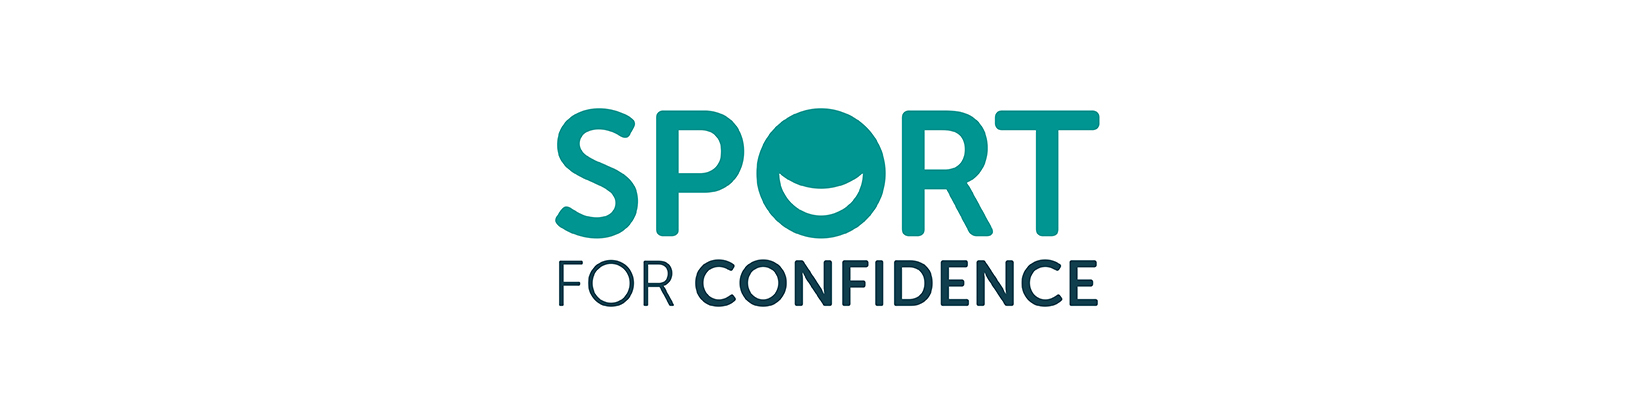 Sport for Confidence logo